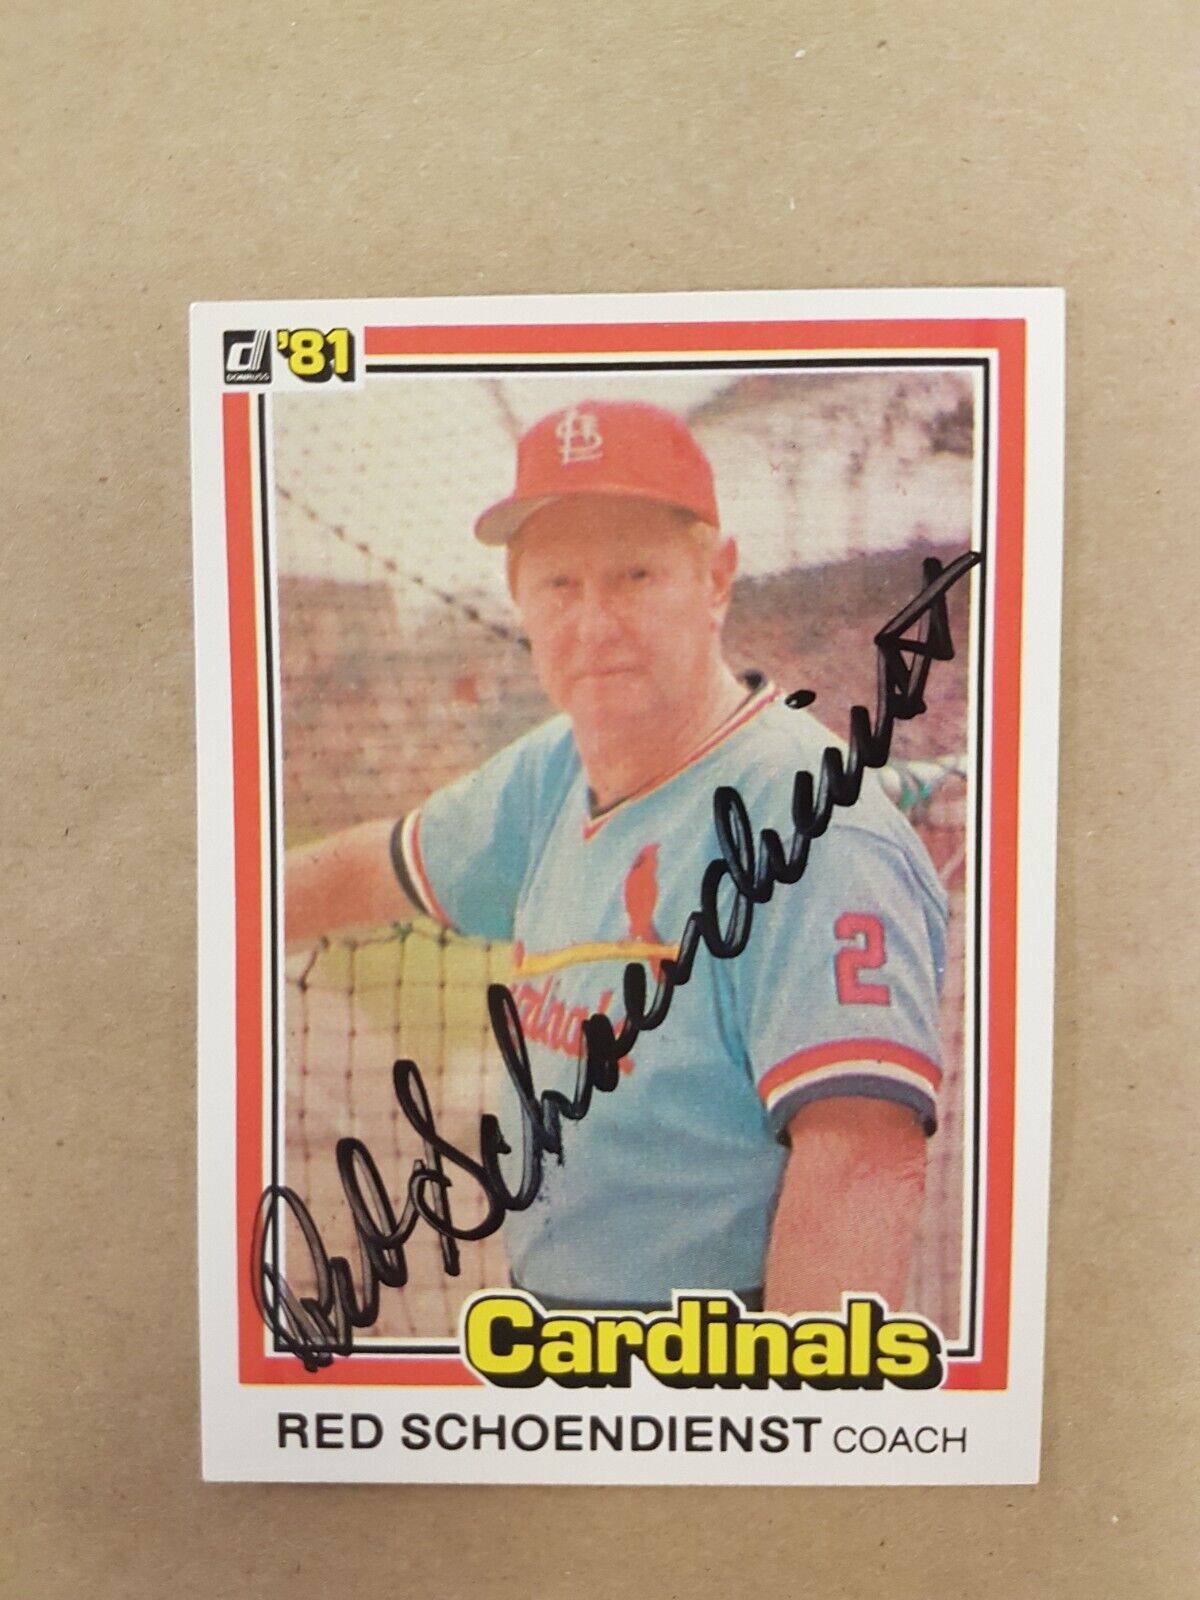 Red Schoendienst 431 Dunruss 1981 Autograph SPORTS signed Baseball card MLB